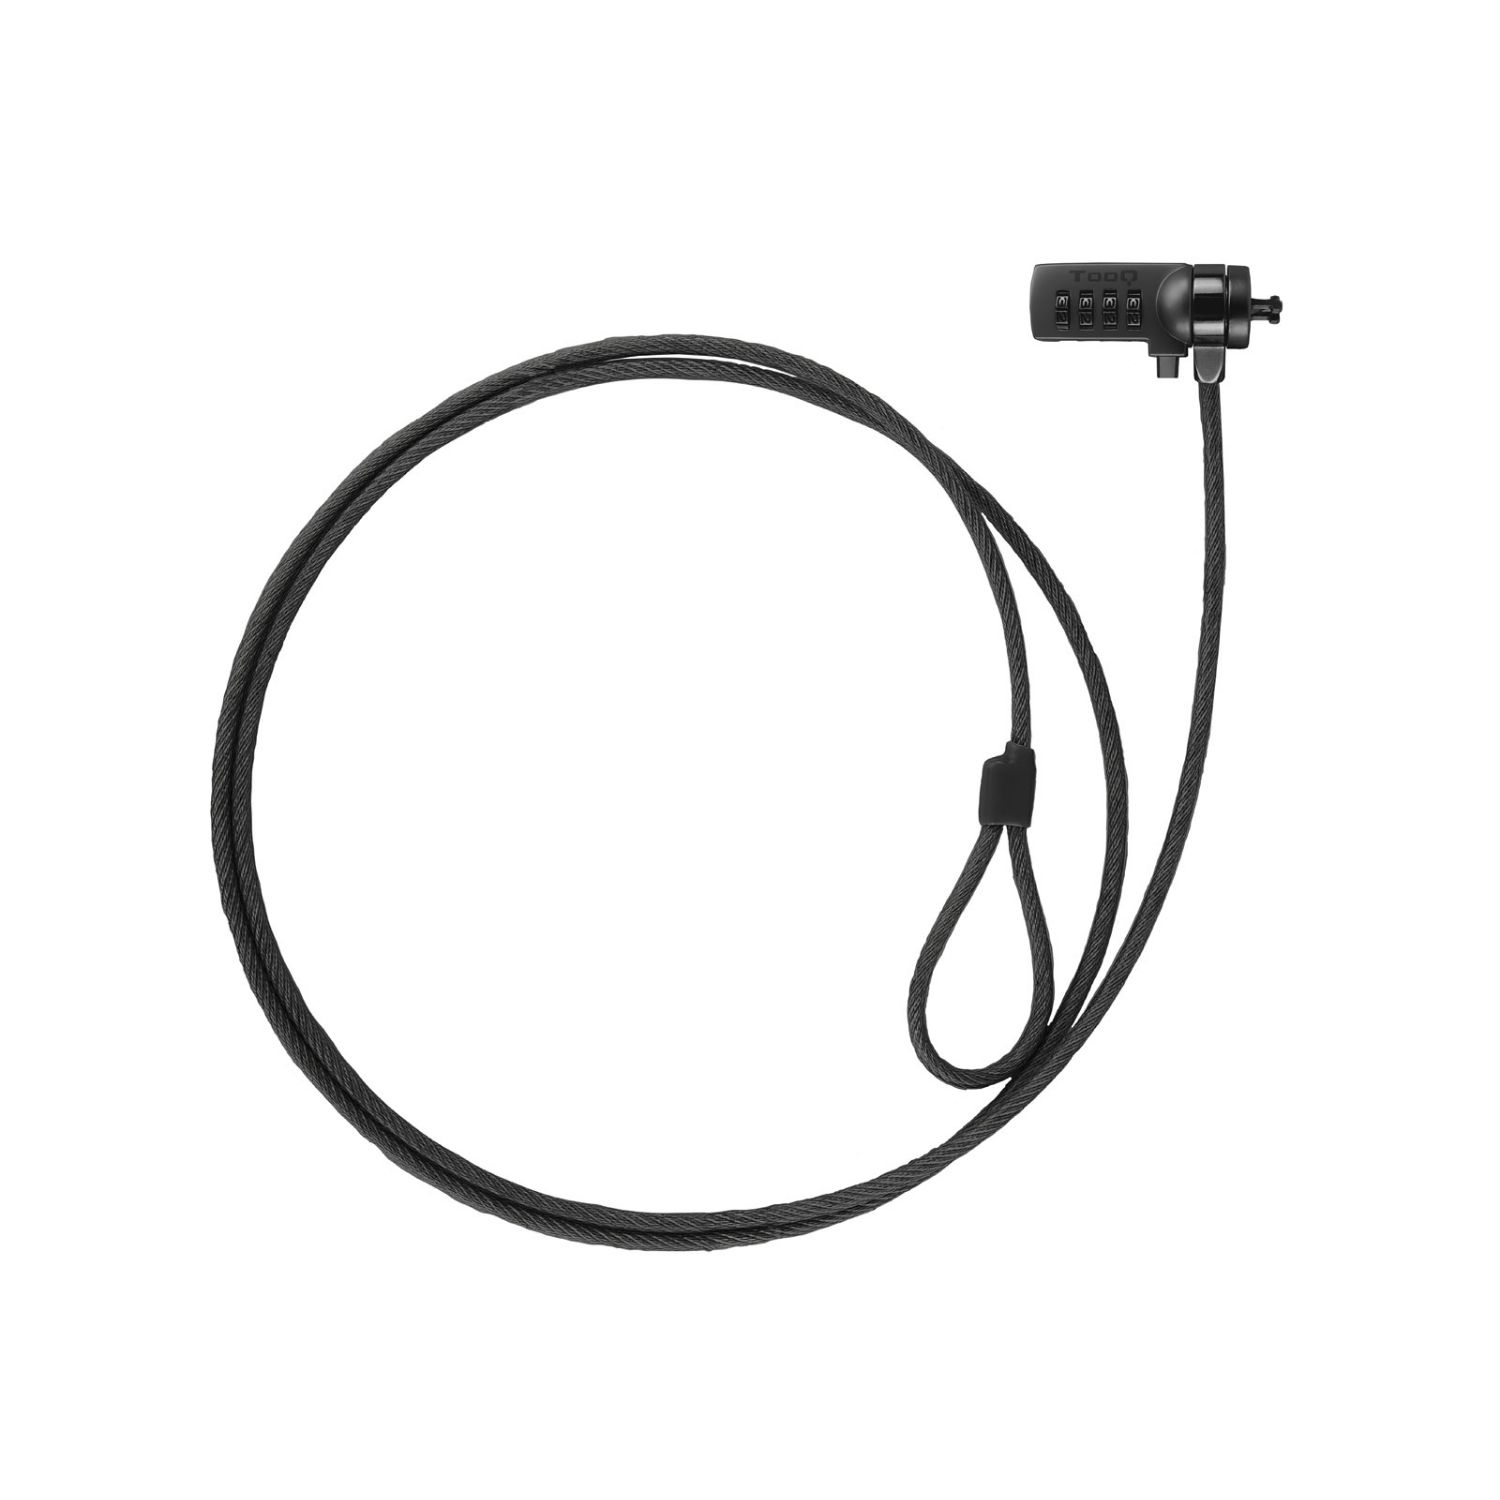 TQCLKC0015-G - Cable de seguridad TOOQ 1.5m, bloqueo con combinacin de 4 dgitos, gris oscuro. (TQCLKC0015-G)